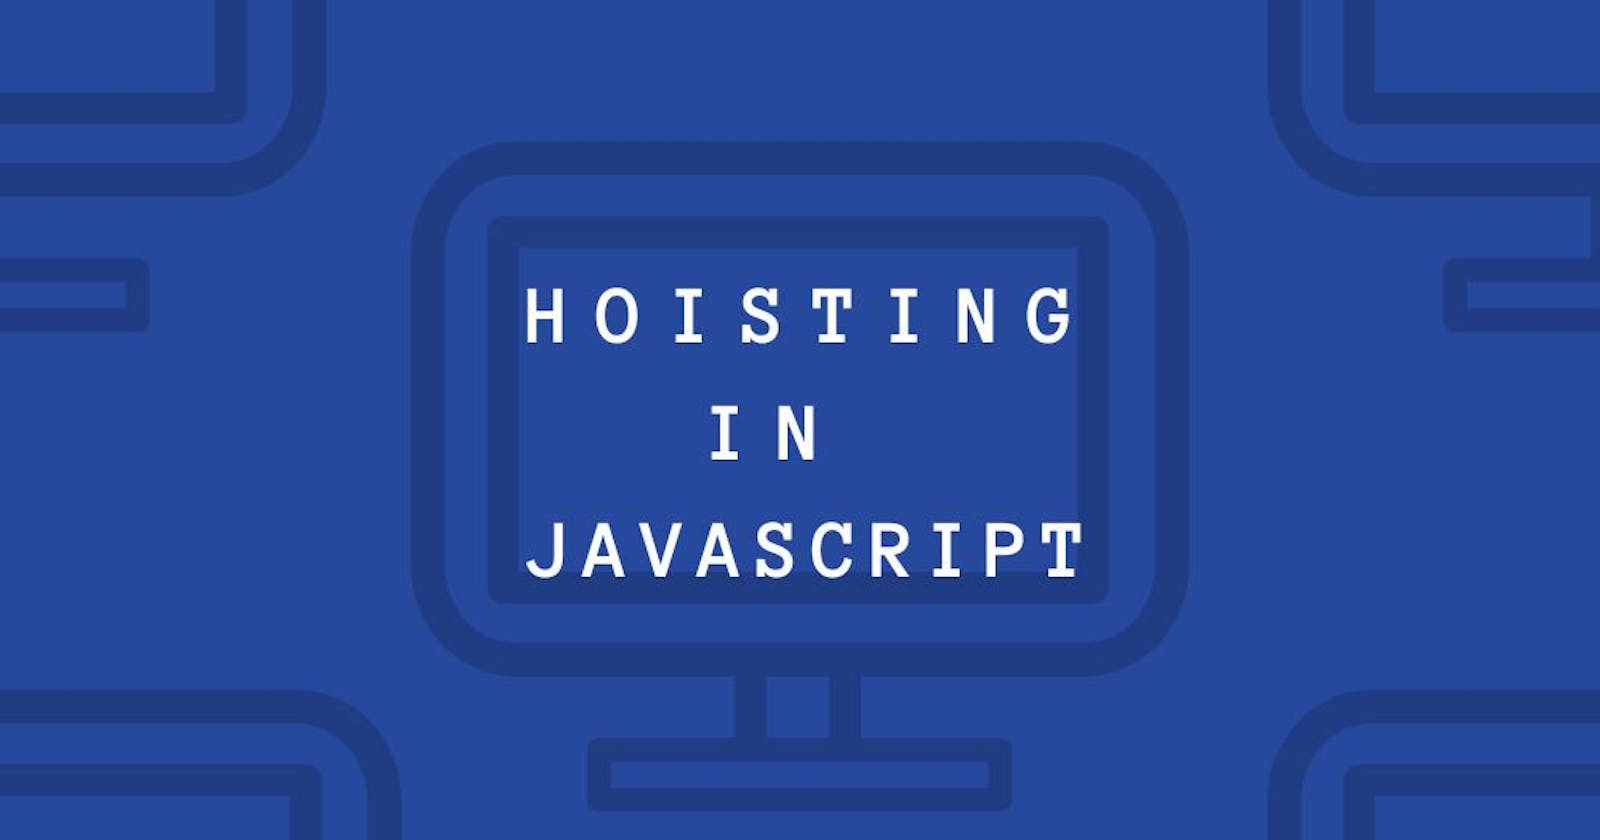 Hoisting in javaScript